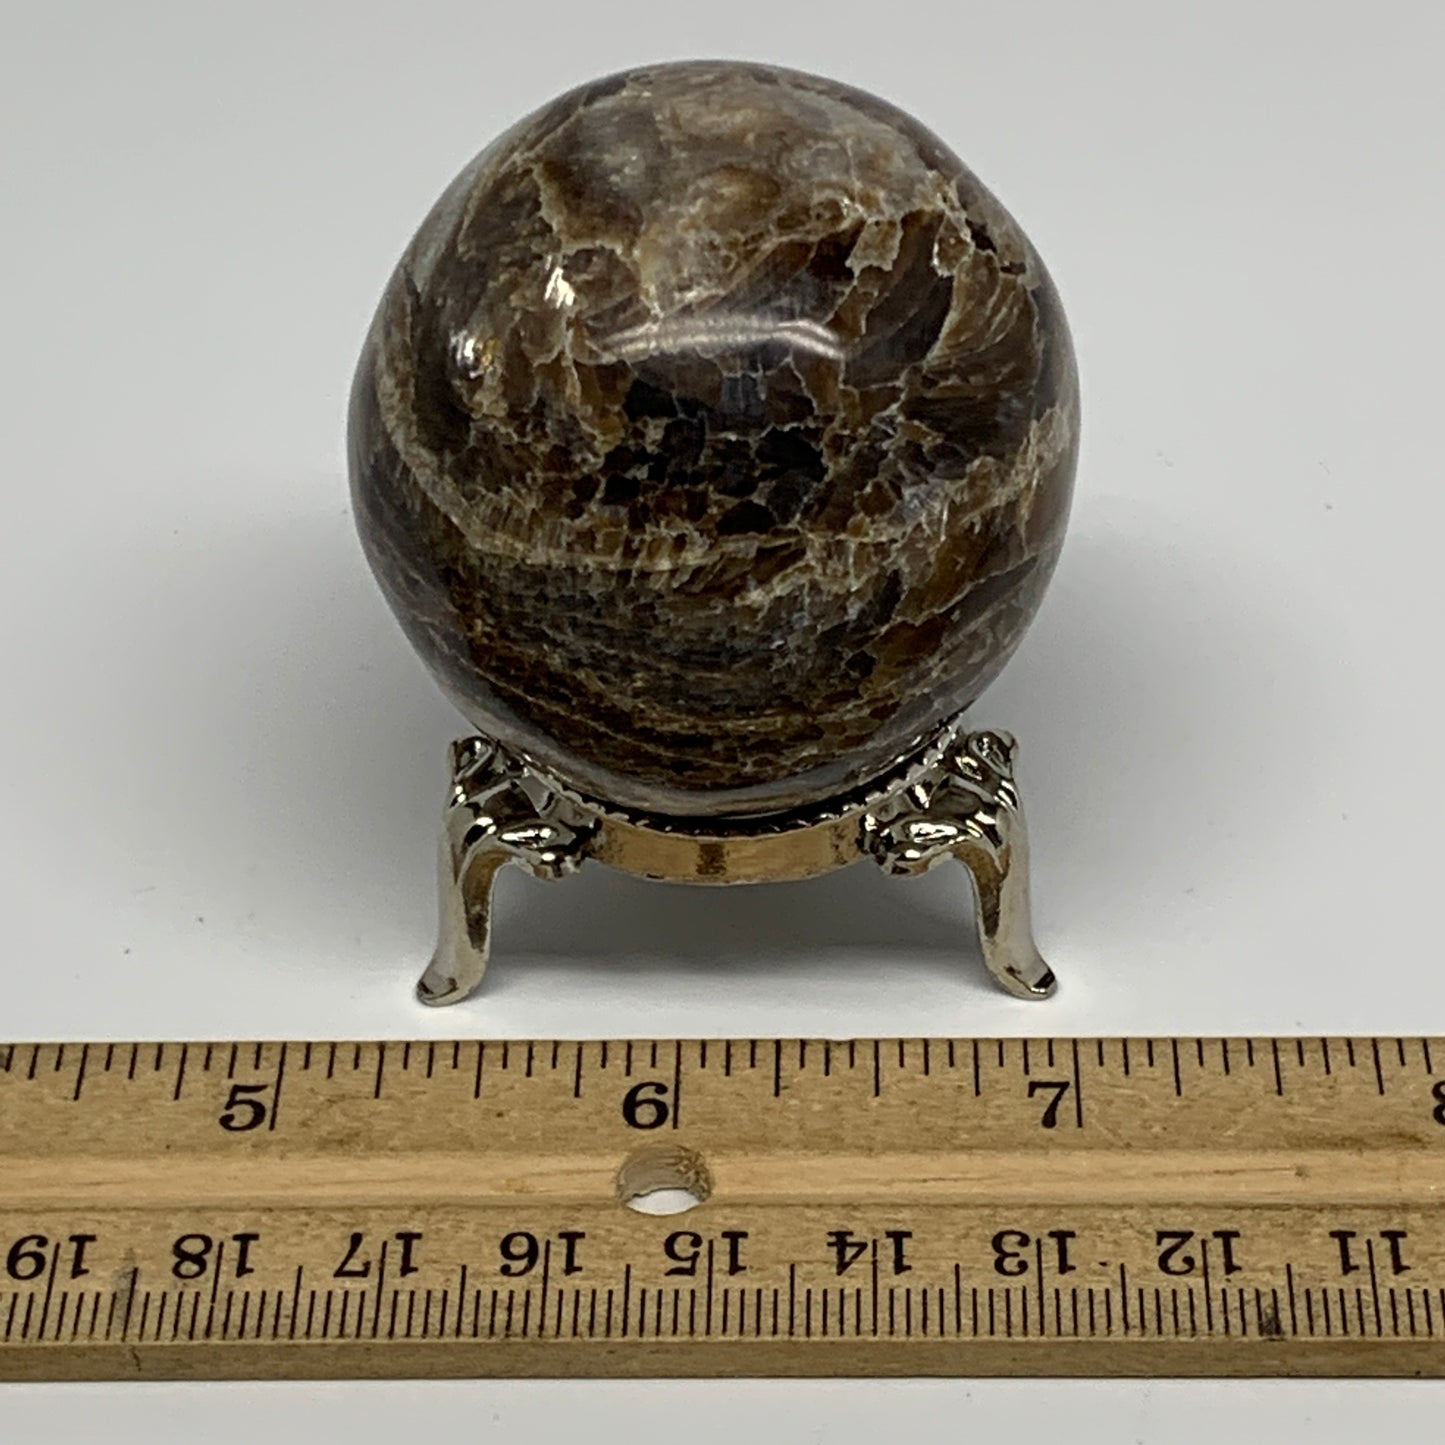 123.2g, 1.9" (47mm), Chocolate/Gray Onyx Sphere Ball Gemstone @Morocco, B18835